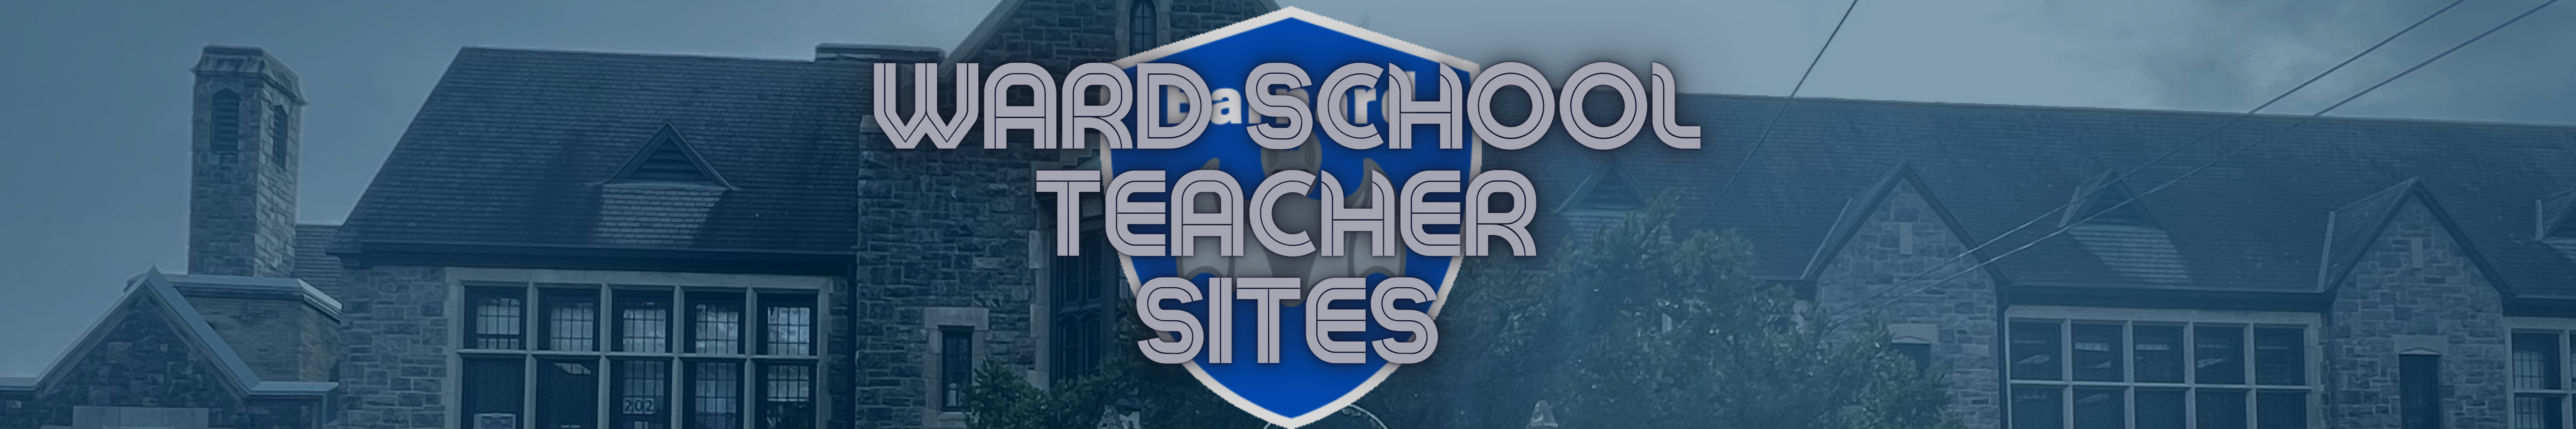 Ward School Teacher Sites banner